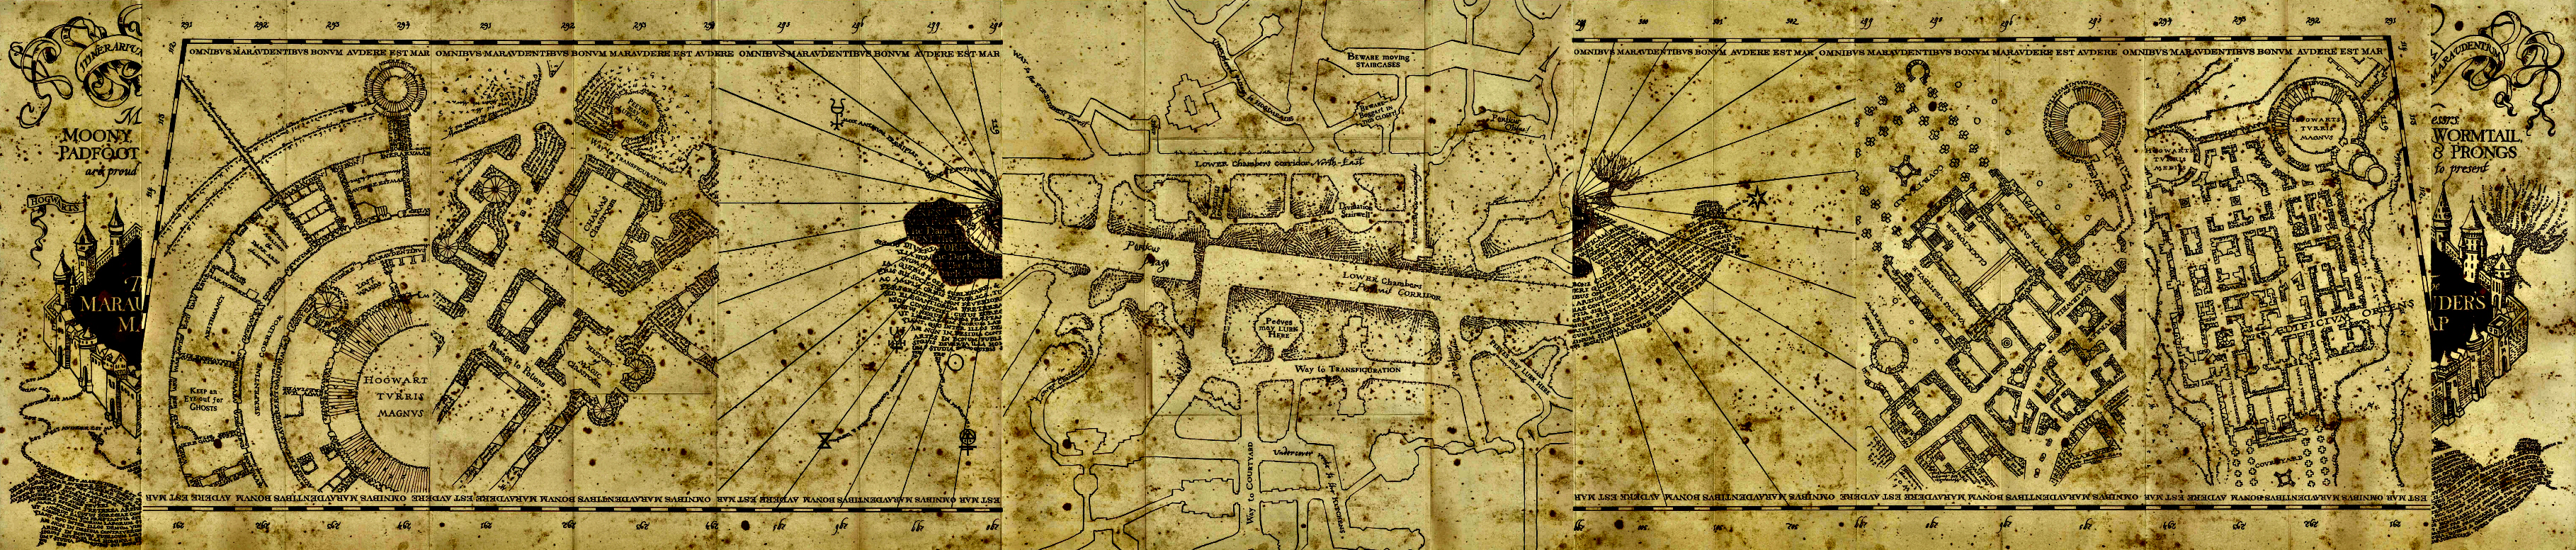 The Marauder's Map by CiroGiso on DeviantArt